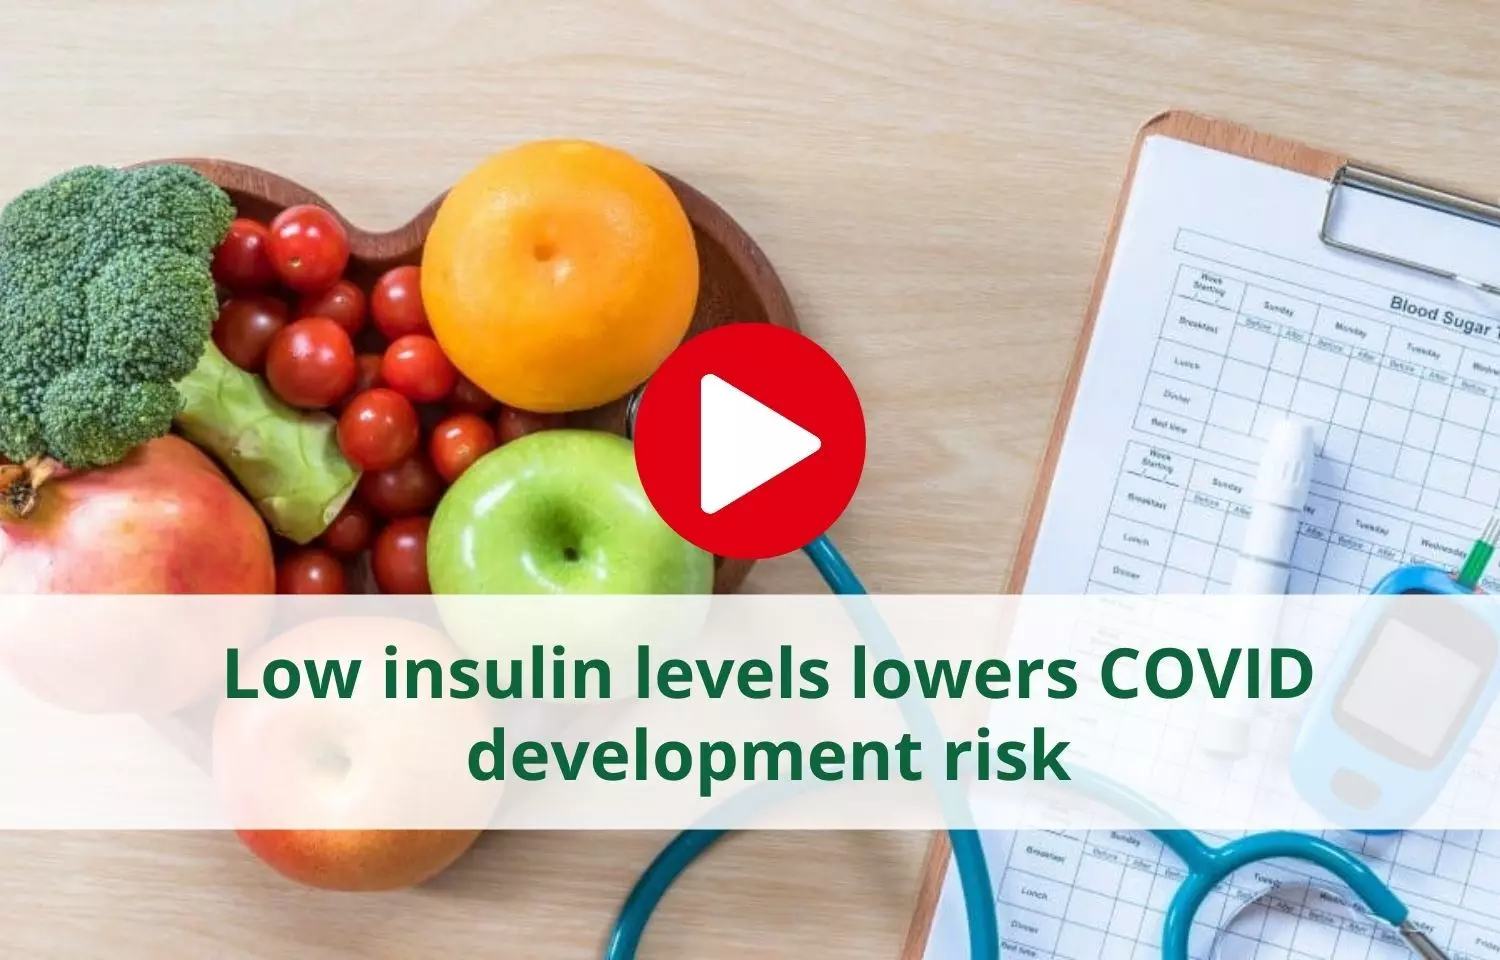 Low insulin levels lower COVID 19 development risk